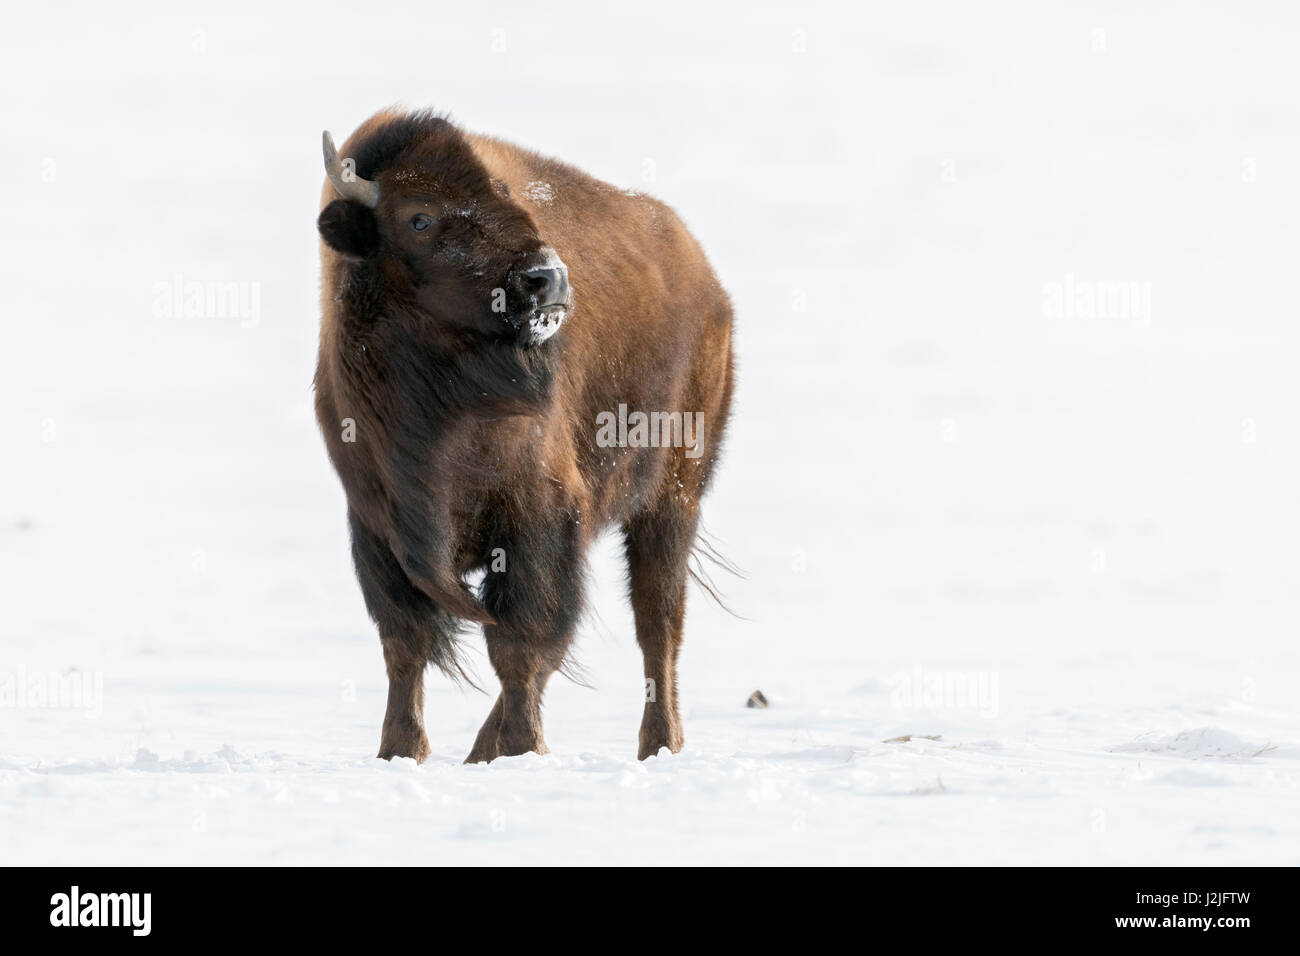 American bison / Amerikanischer Bison ( Bison bison ) in snow, watching dangerous, threatening to the photographer, Montana, USA. Stock Photo